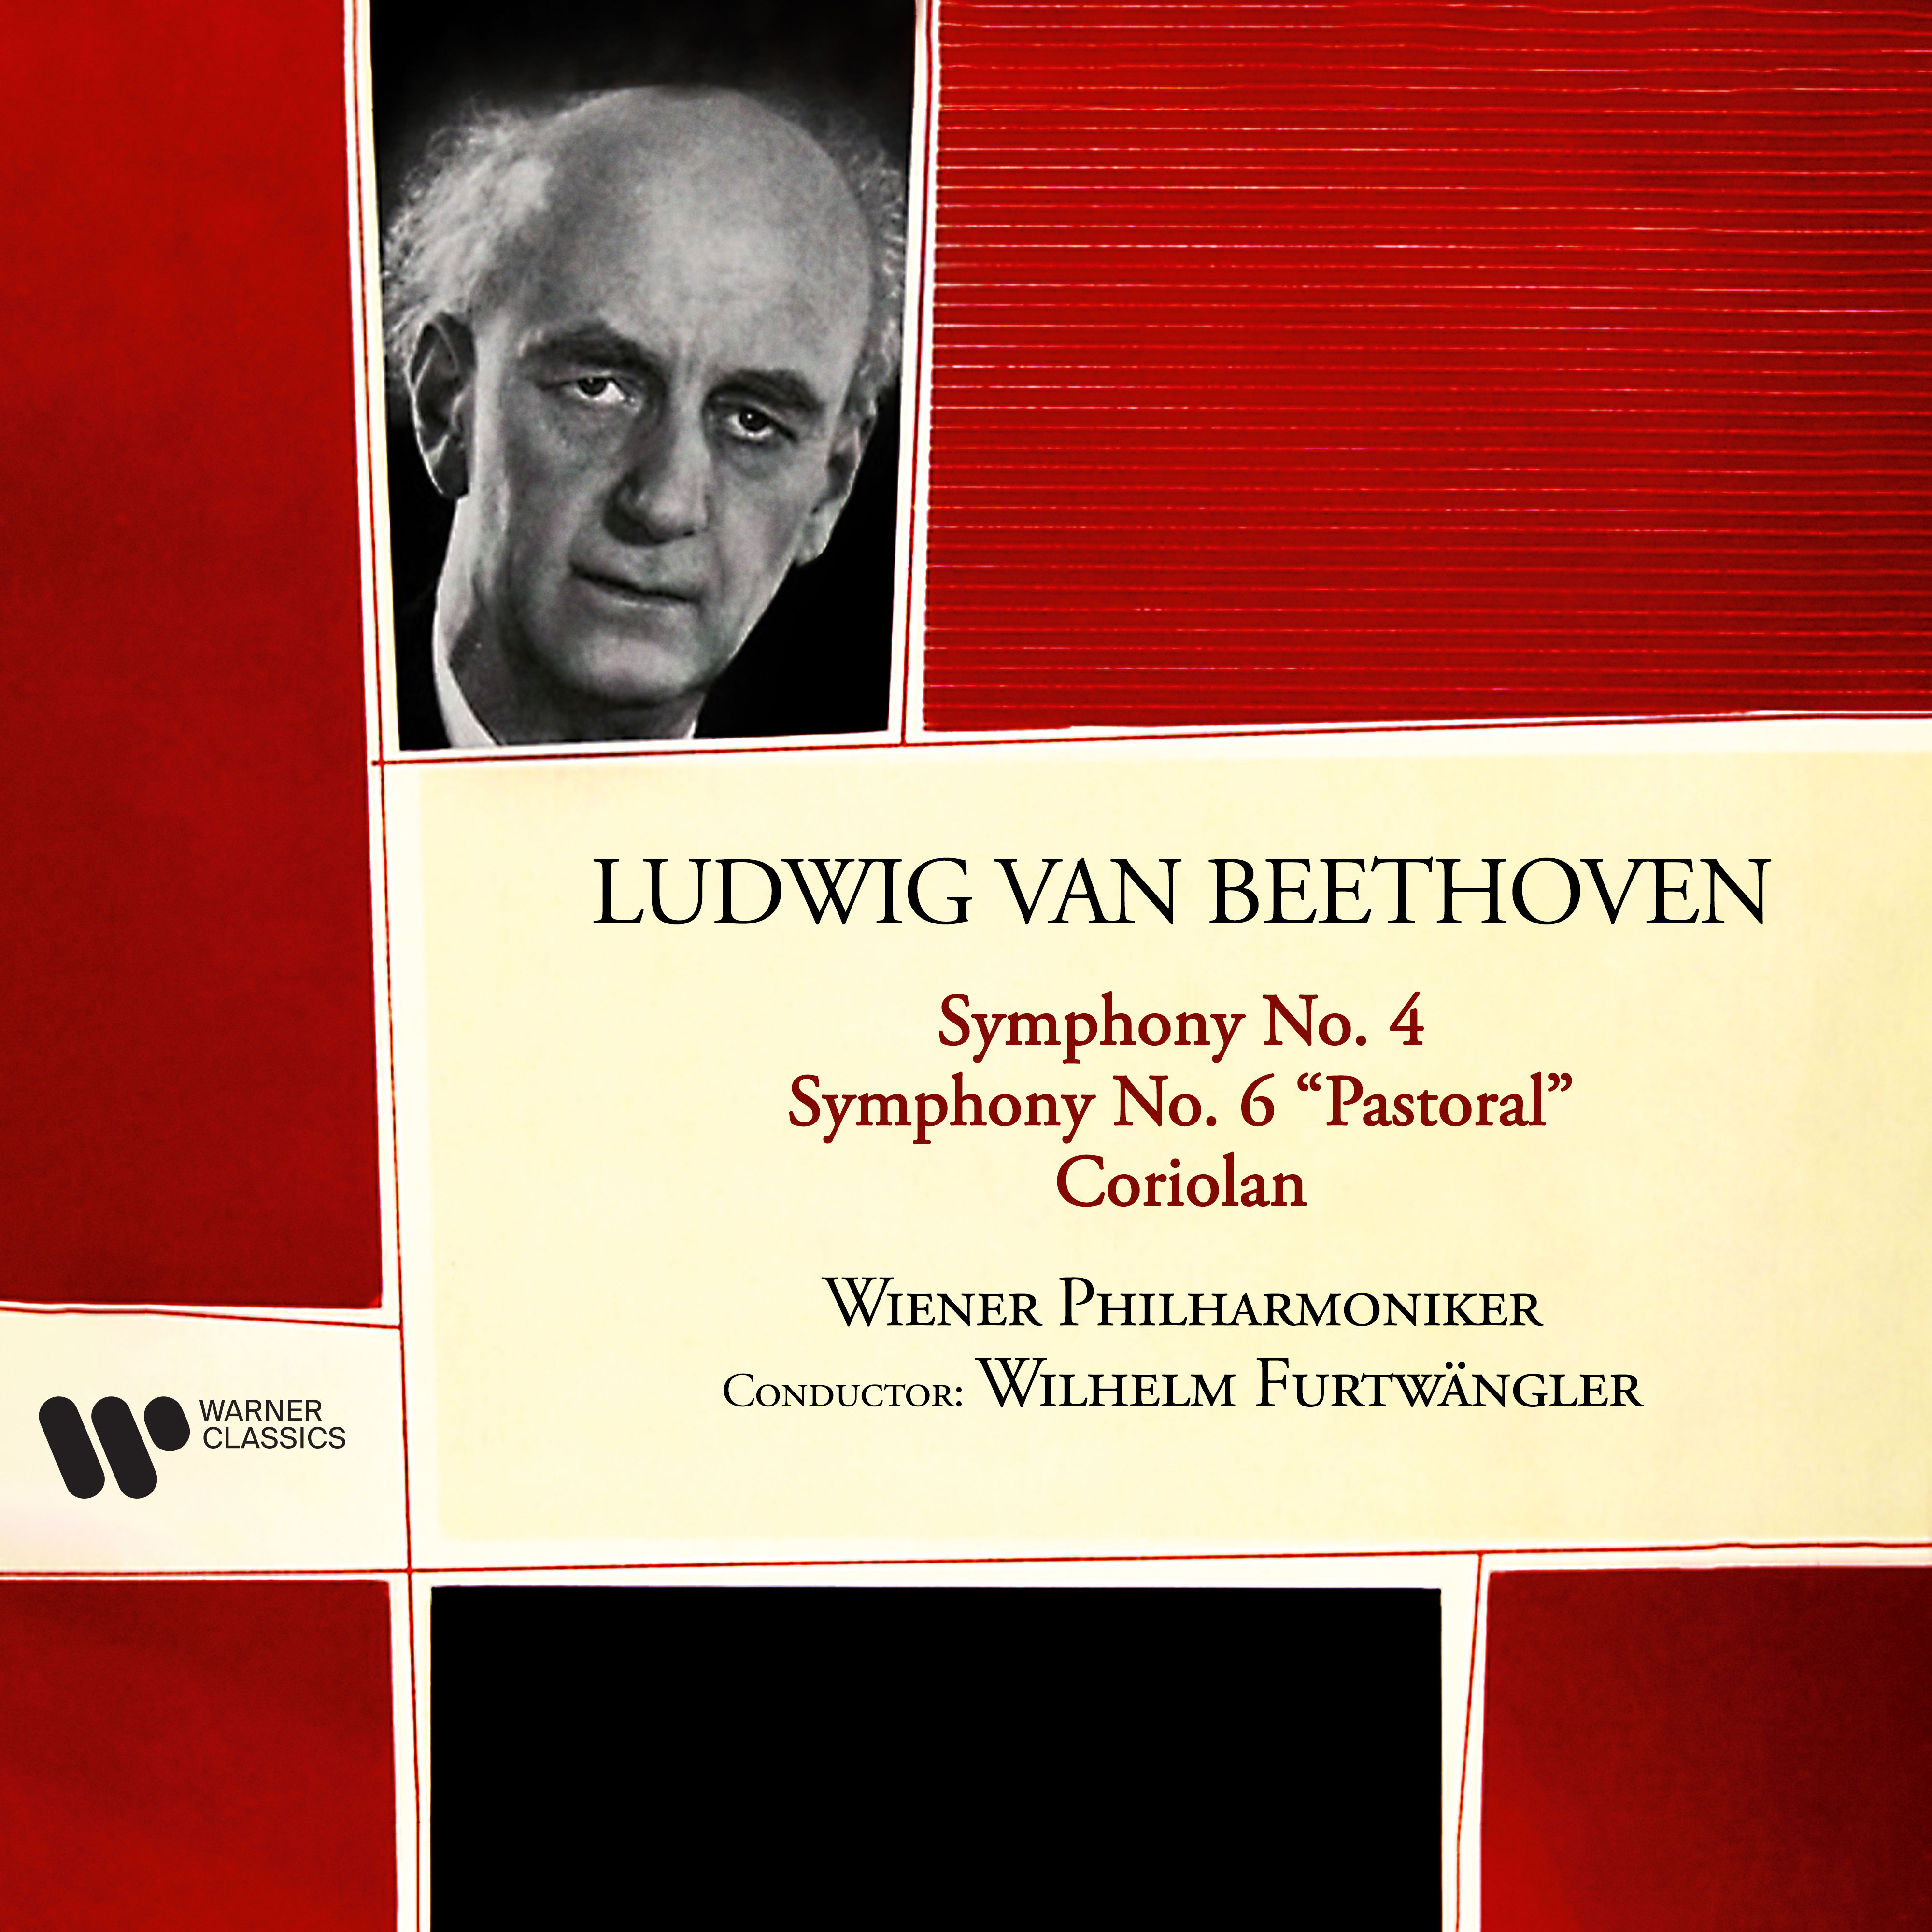 Wiener Philharmoniker, Wilhelm Furtwangler - Beethoven: Coriolan, Symphonies Nos. 4 & 6 “Pastoral” (2021) [FLAC 24bit/192kHz]